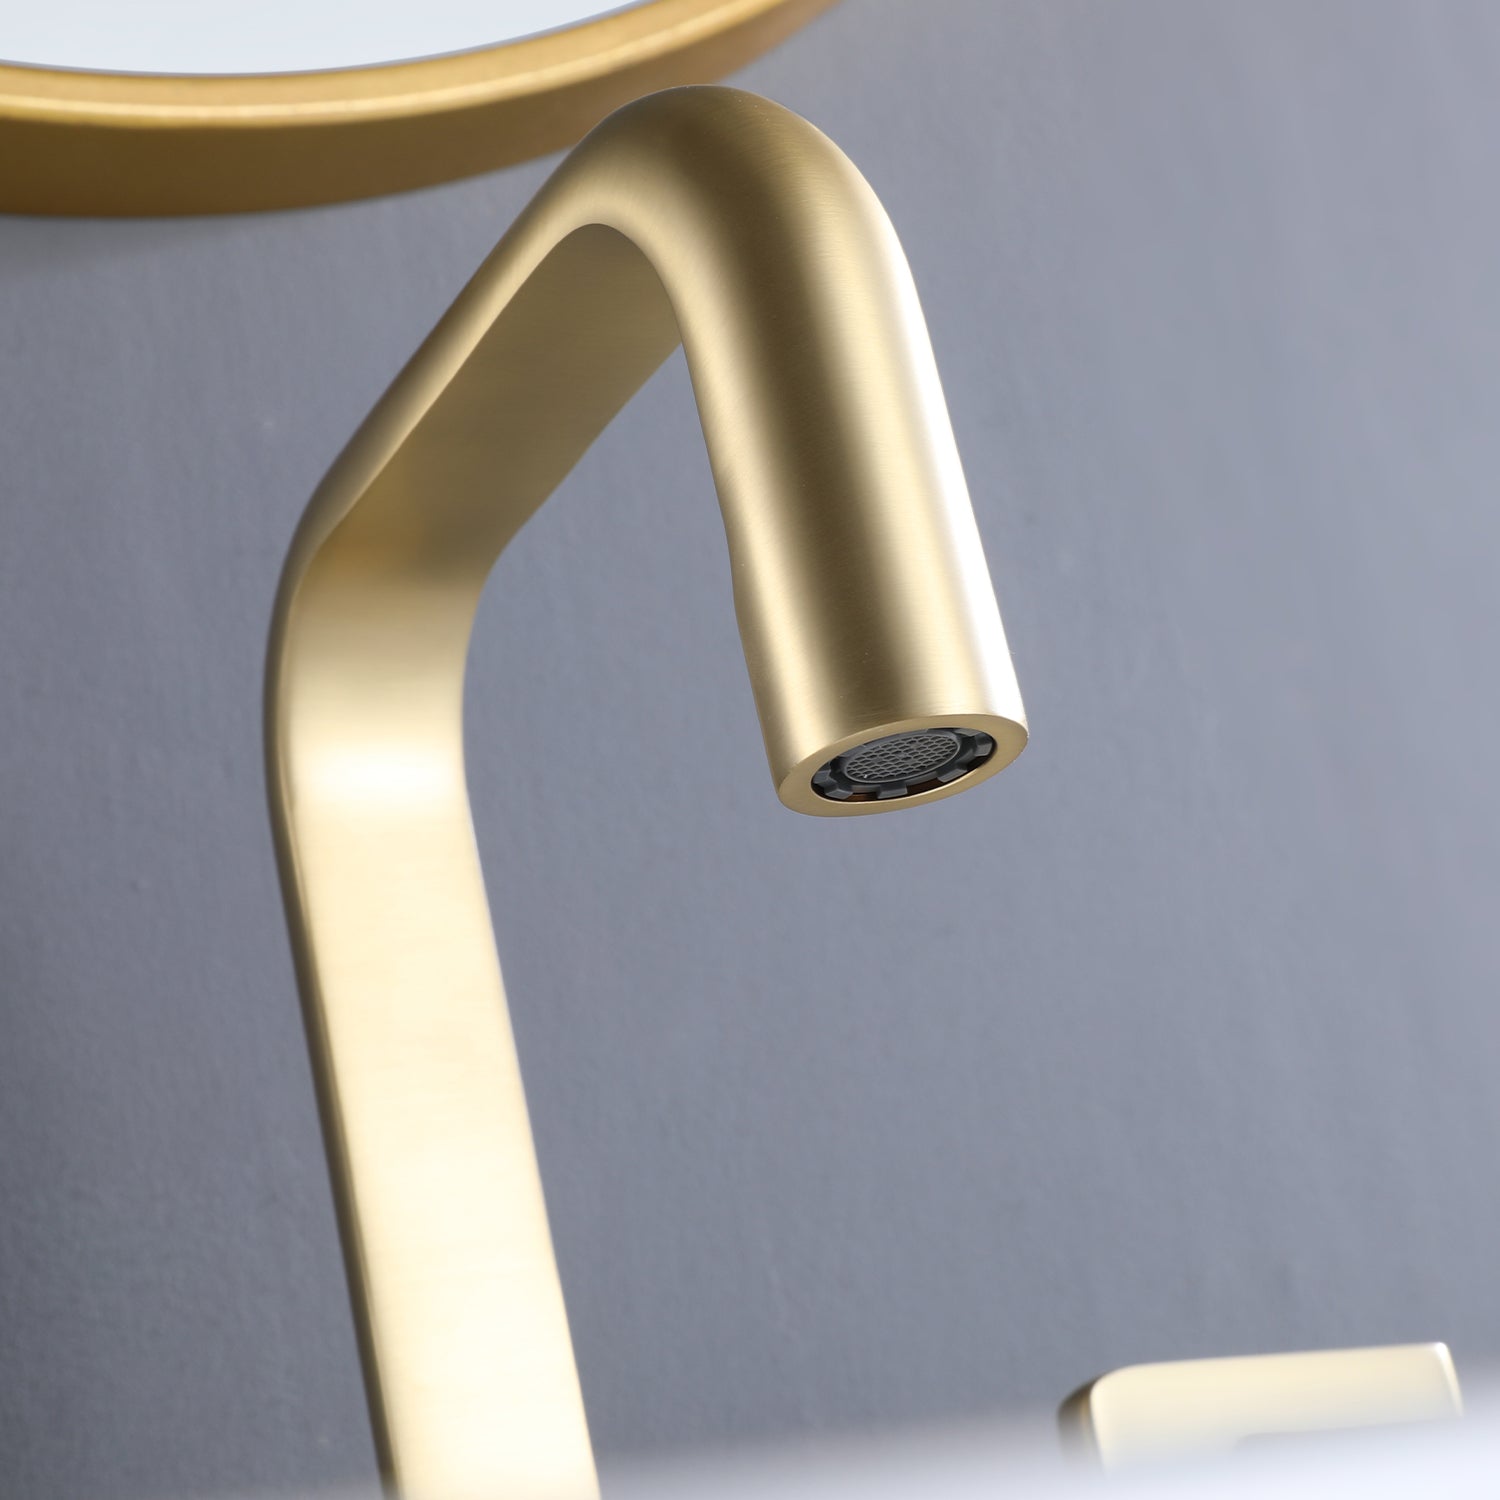 8 in. Widespread Double Handle Solid Brass Bathroom Faucet